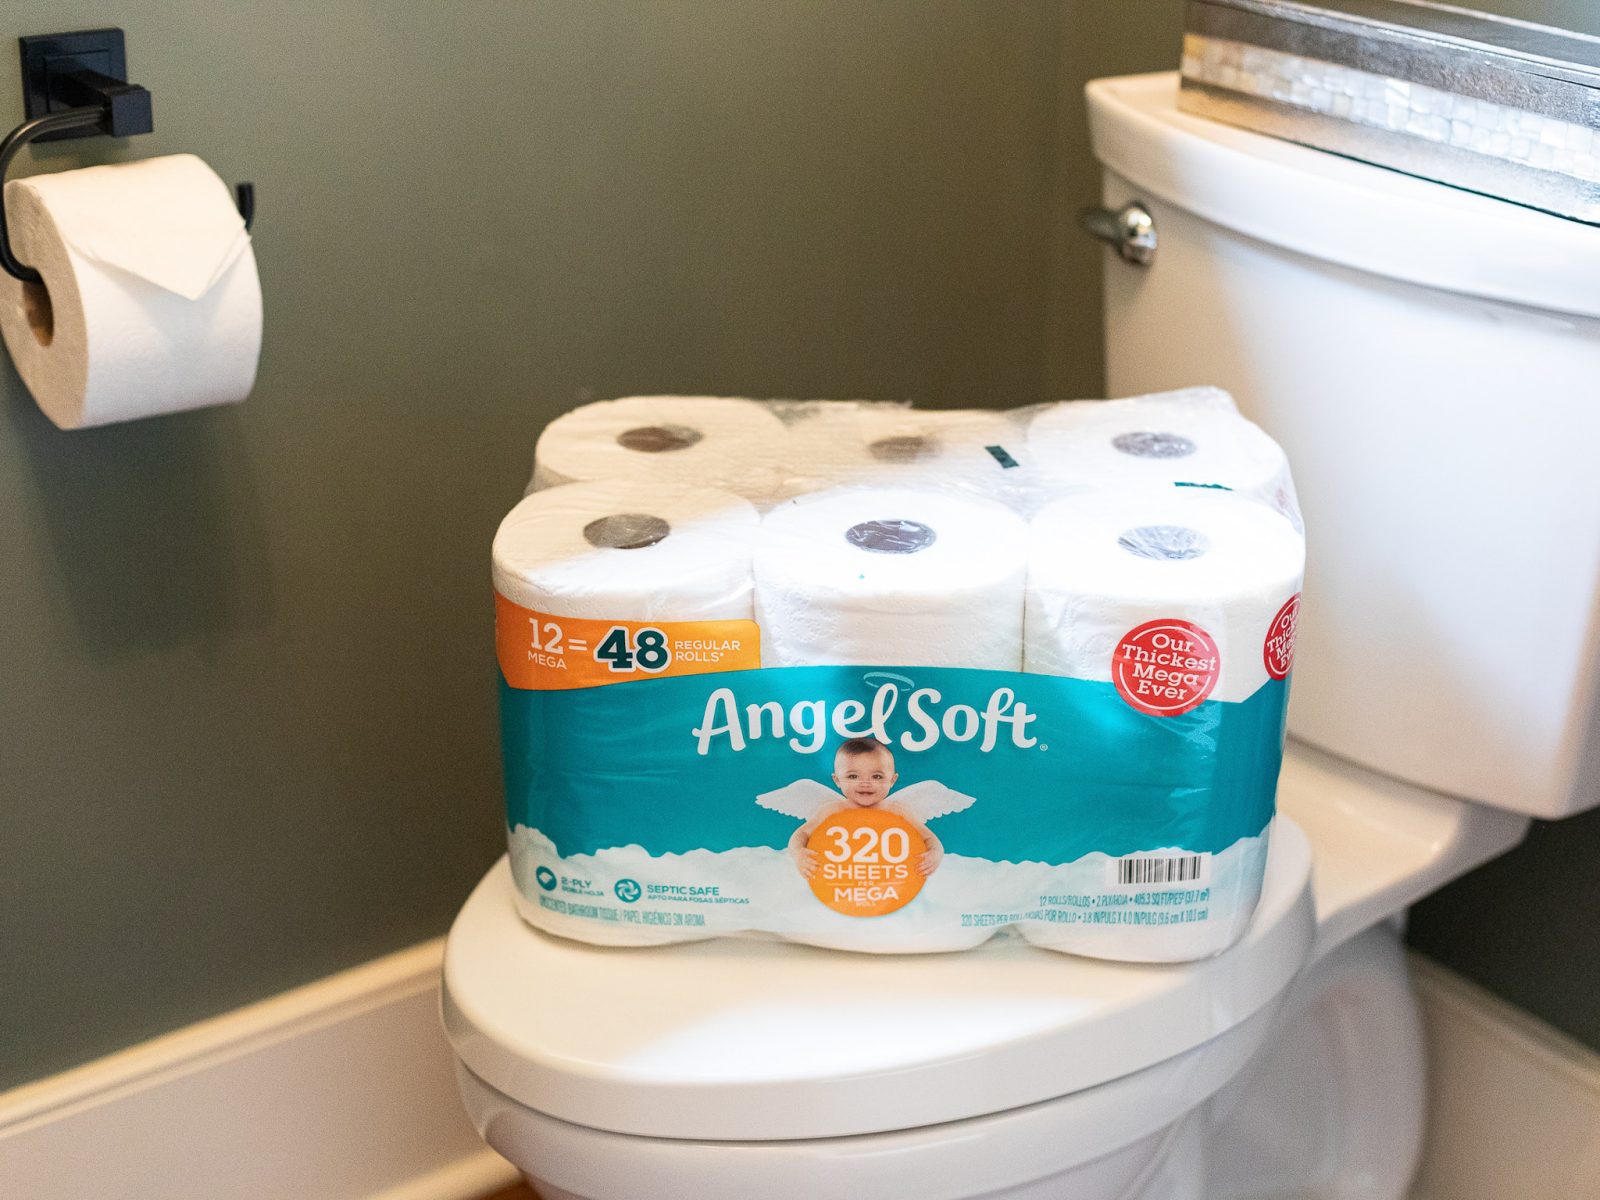 Angel Soft Bath Tissue Just $6.49 At Publix (Regular Price $11.59) – Ends 10/14